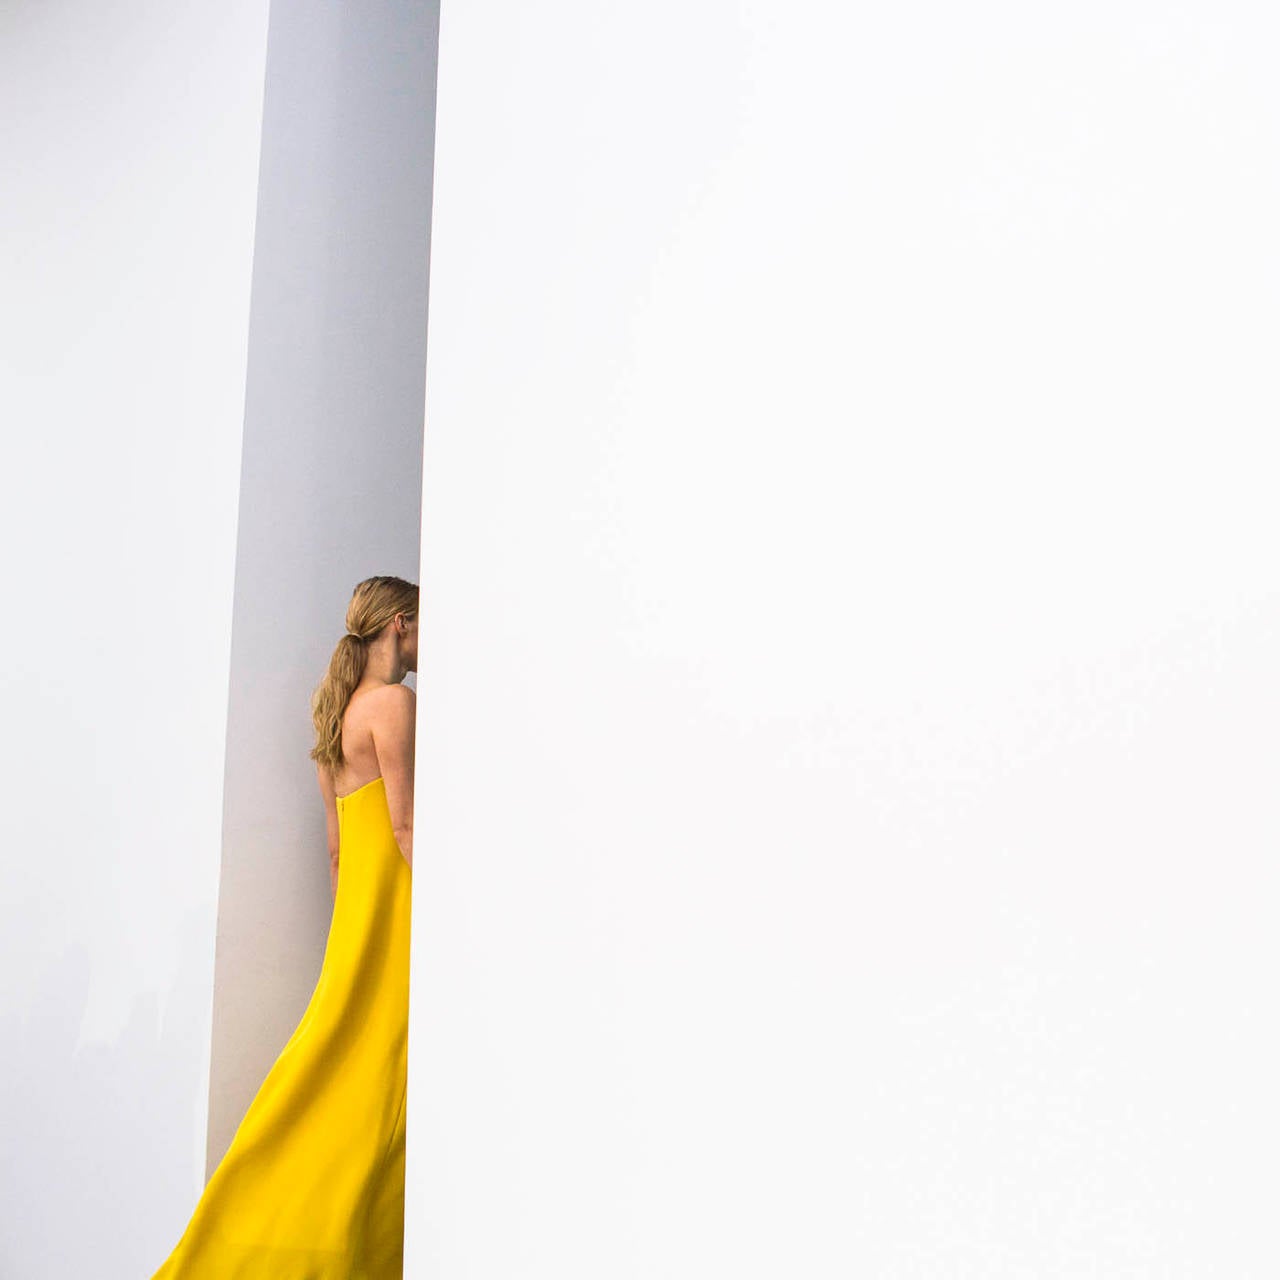 Landon Nordeman Figurative Photograph - Derek Lam (Yellow Dress), New York, New York